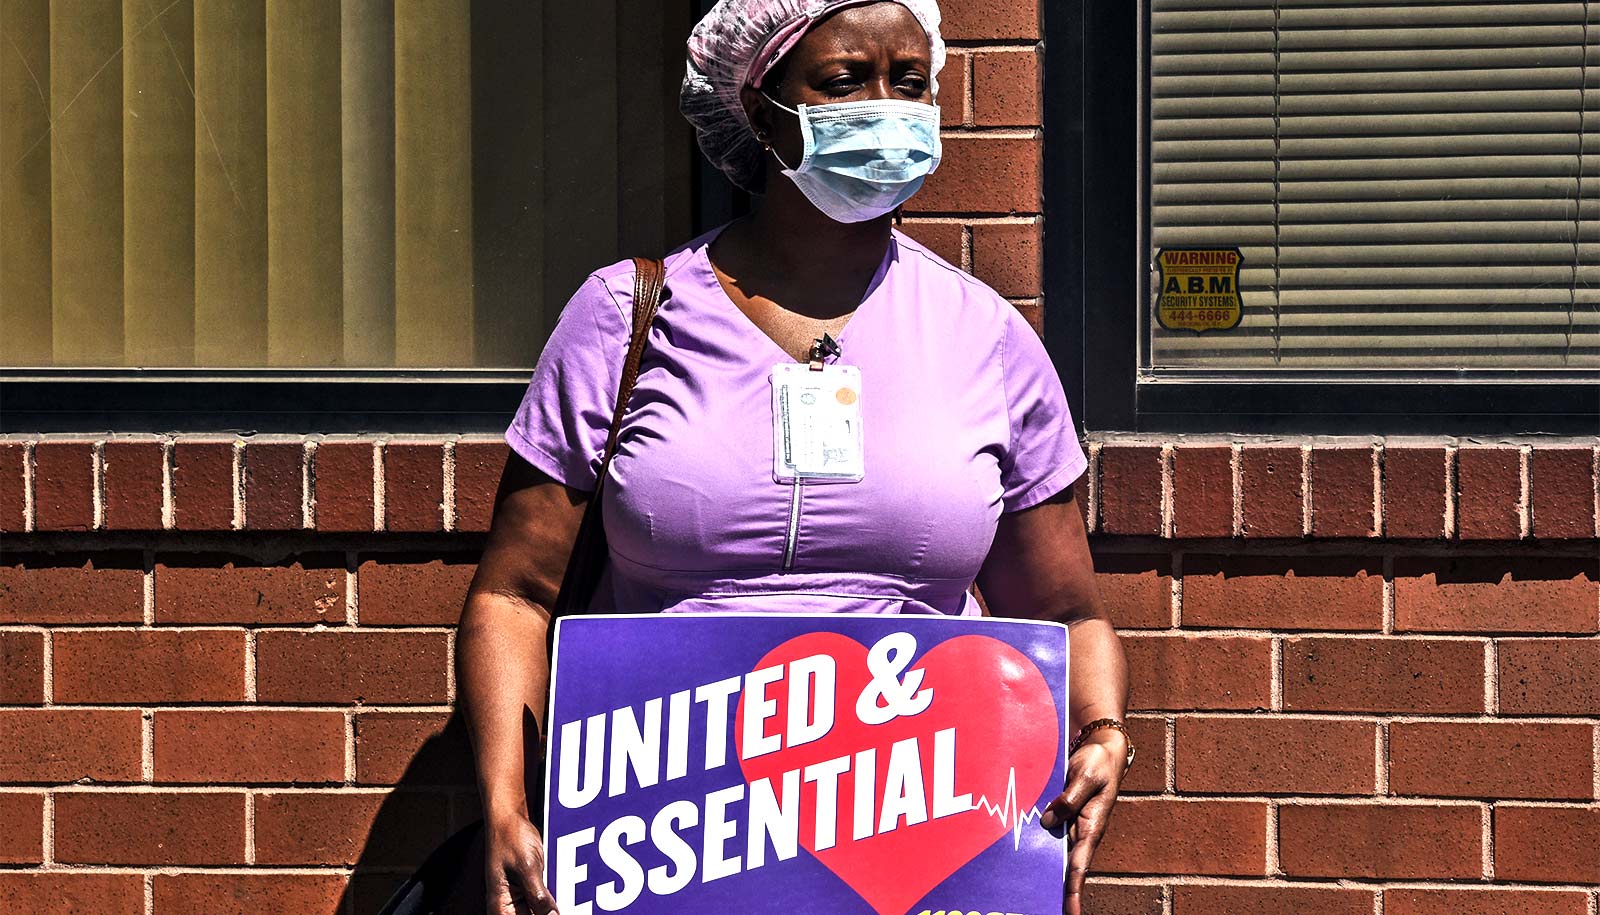 20 of US nursing homes still report PPE shortages Futurity